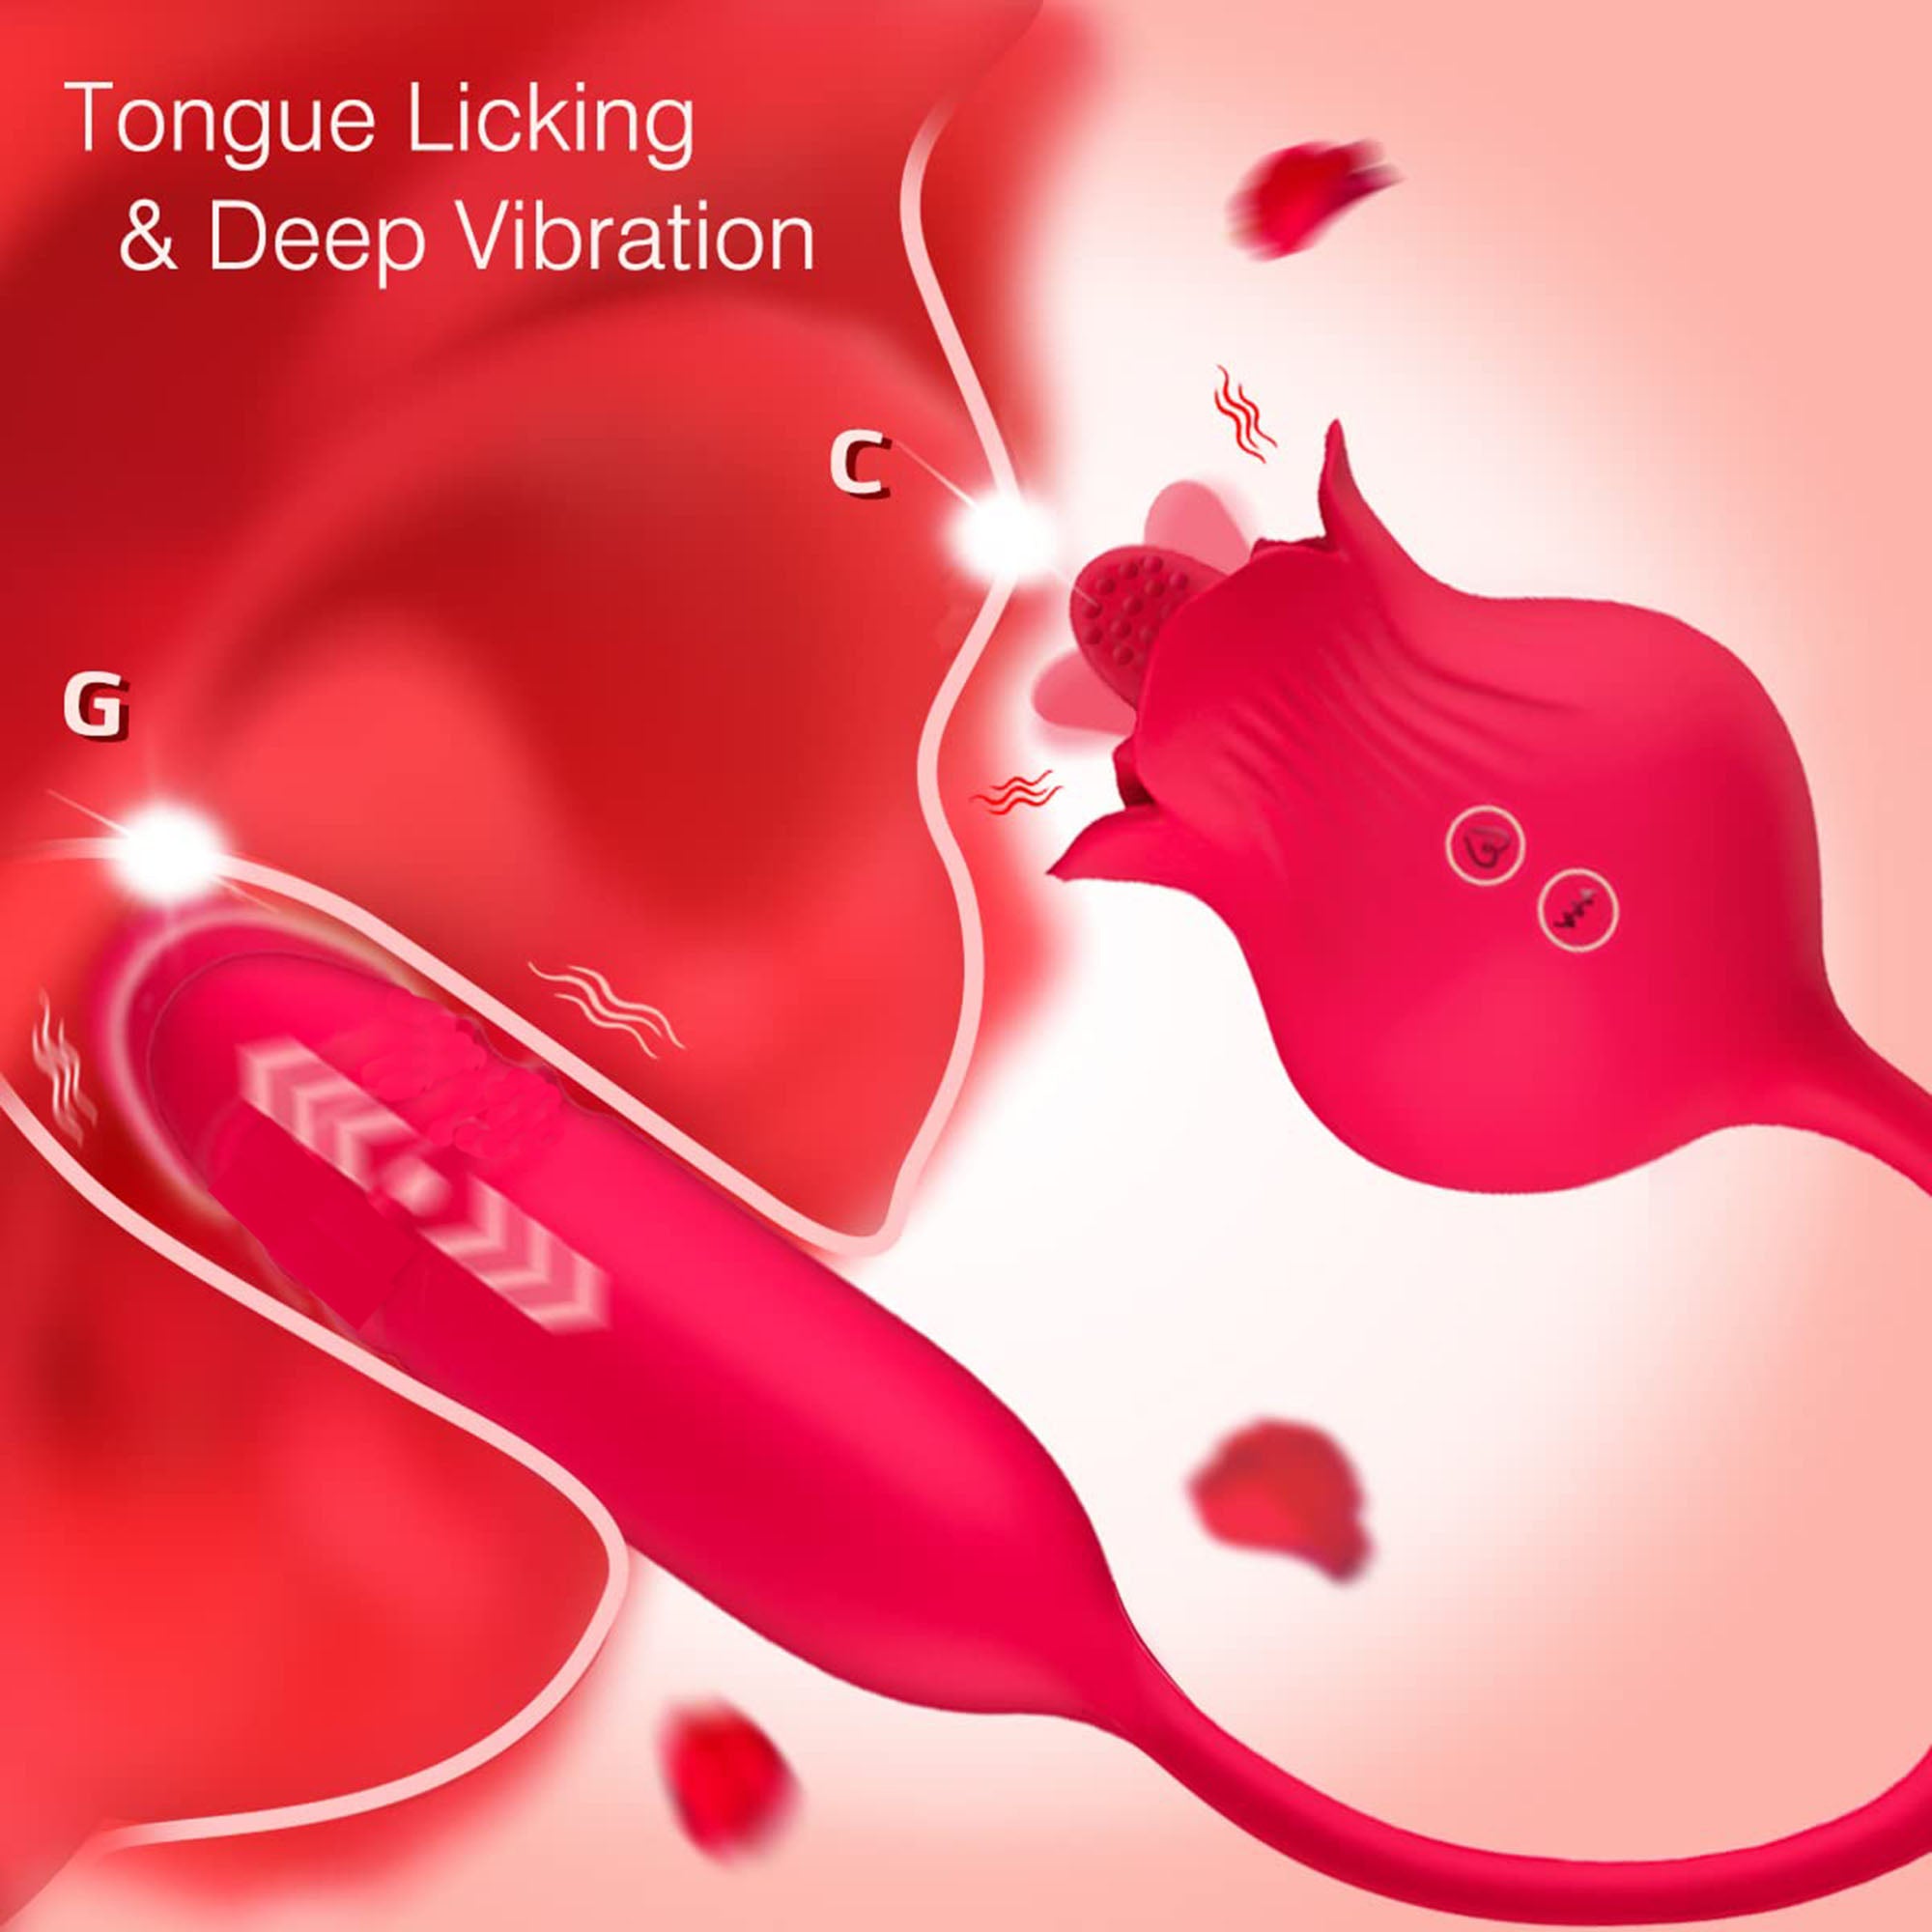 FIDECH Tongue Licking G Spot Rose Vibrator with Vibrating Egg